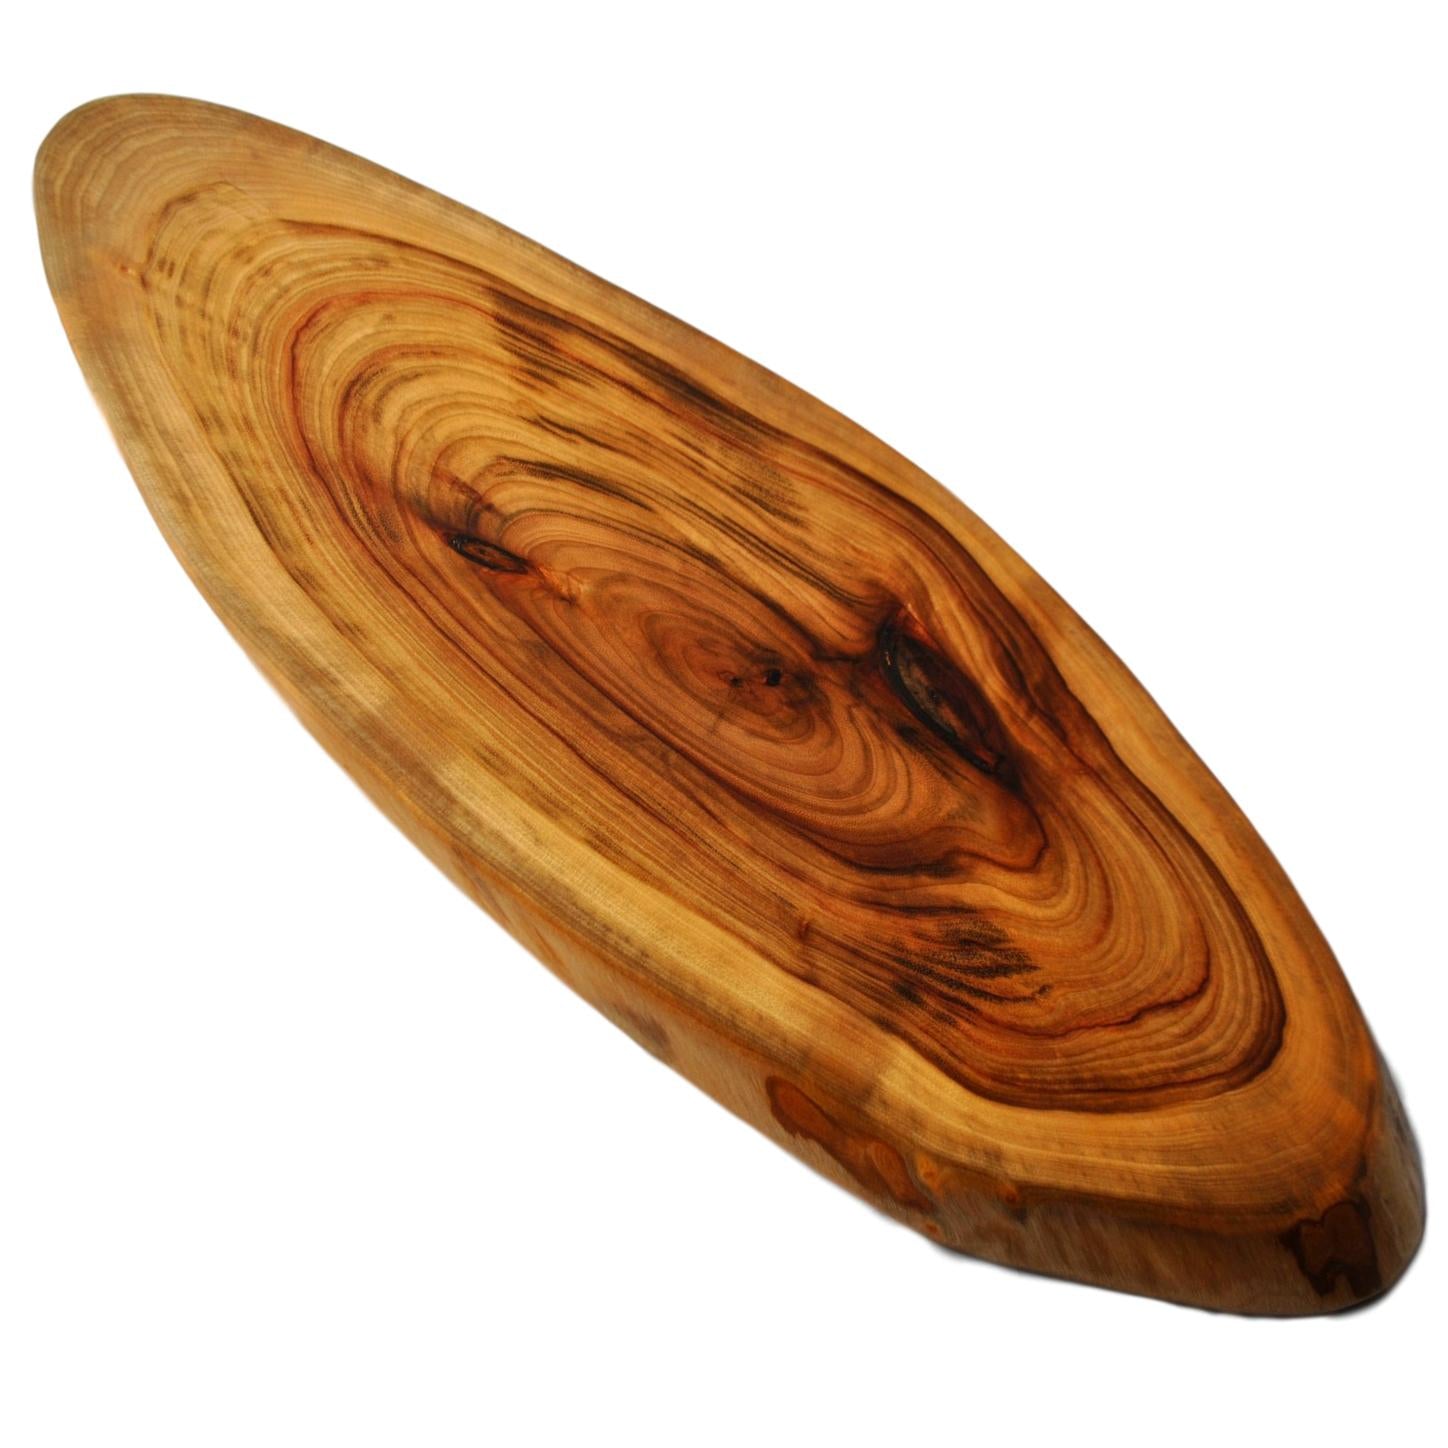 brand new handmade wooden chopping board tree trunk slice